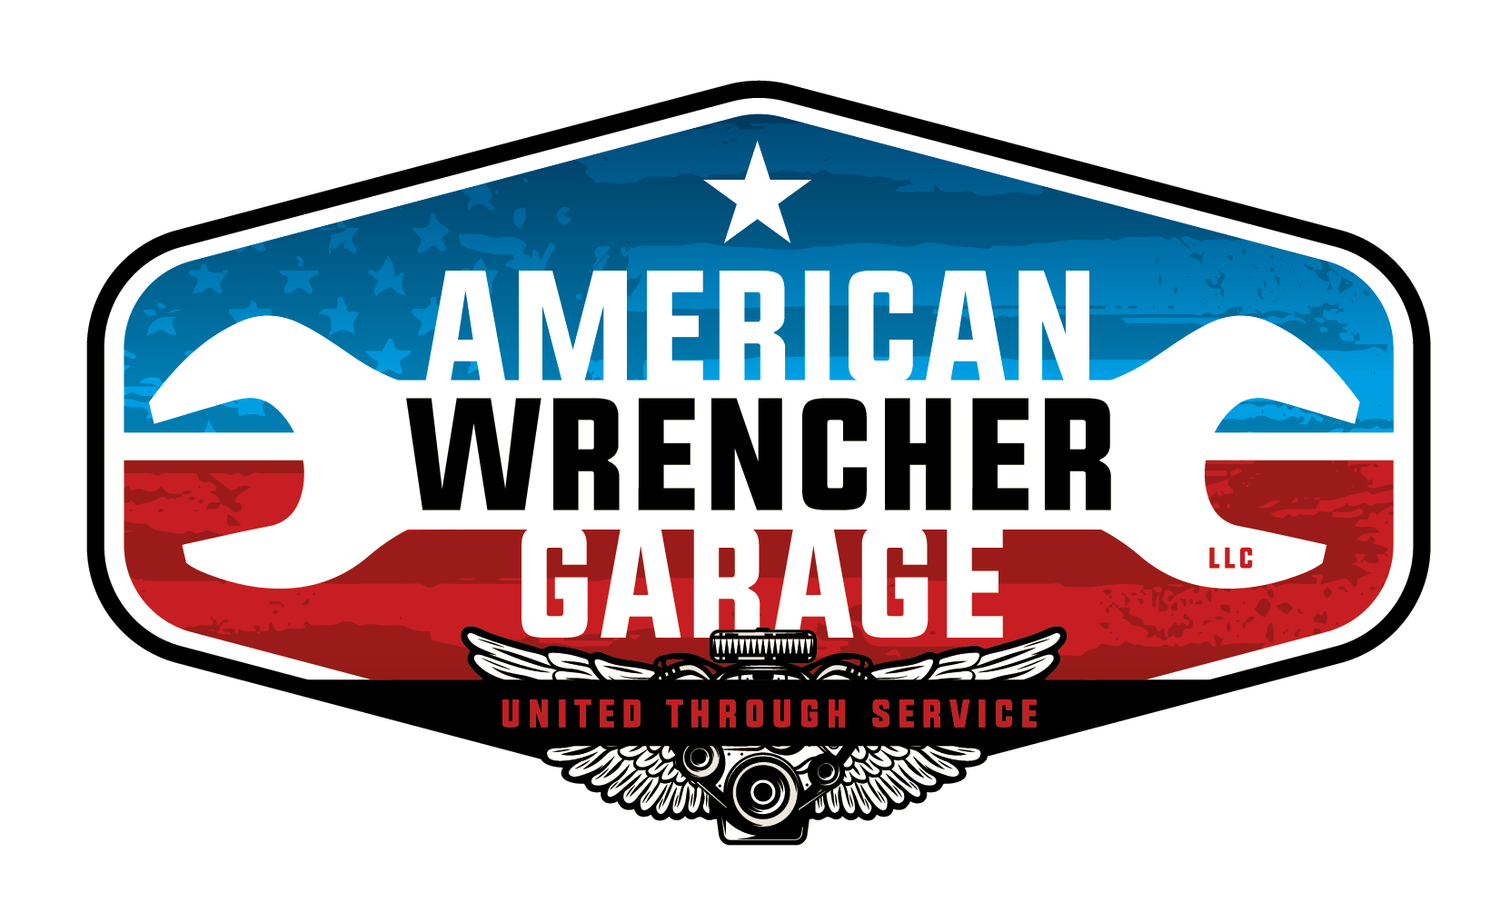 American Wrencher Garage